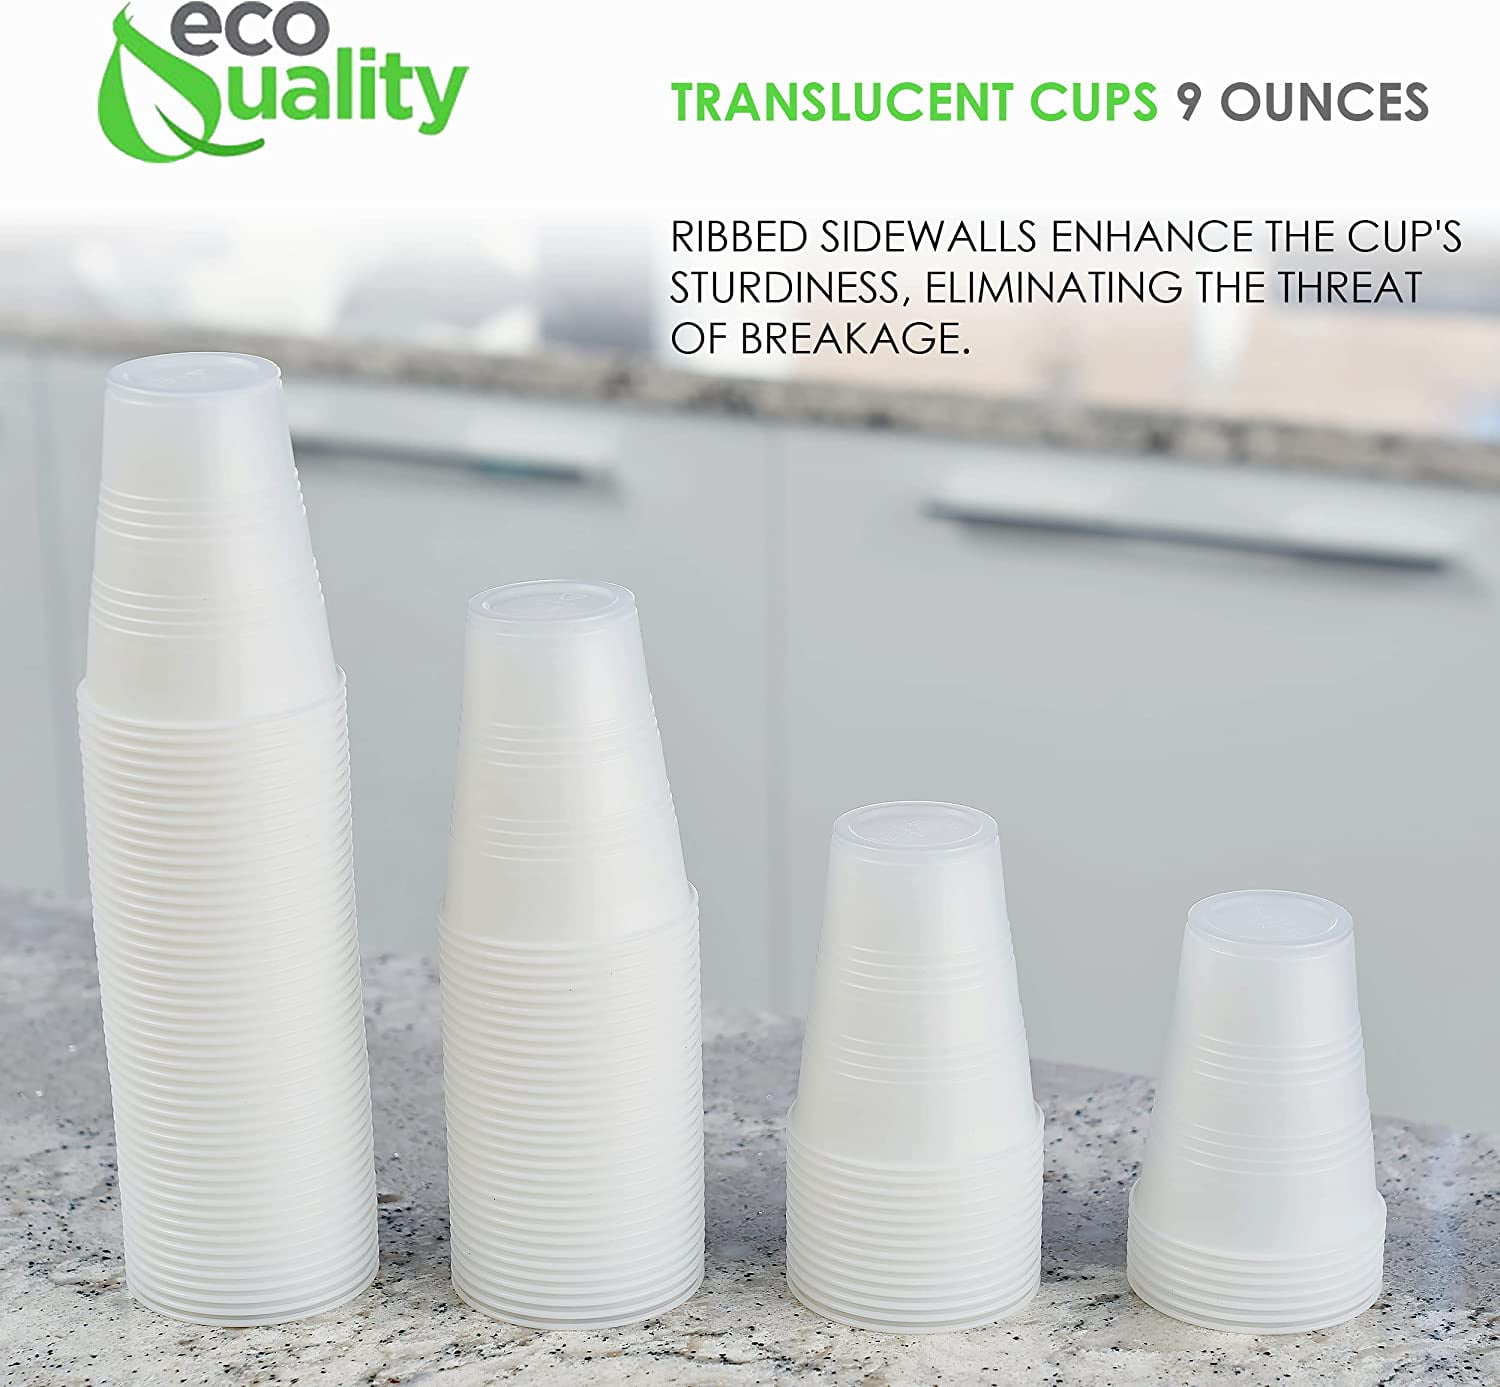 Ciaell 200PCS Gold Plastic Cups - 9Oz Heavy Duty Plastic Cups - Gold Rimmed  Plastic Cups - Disposabl…See more Ciaell 200PCS Gold Plastic Cups - 9Oz